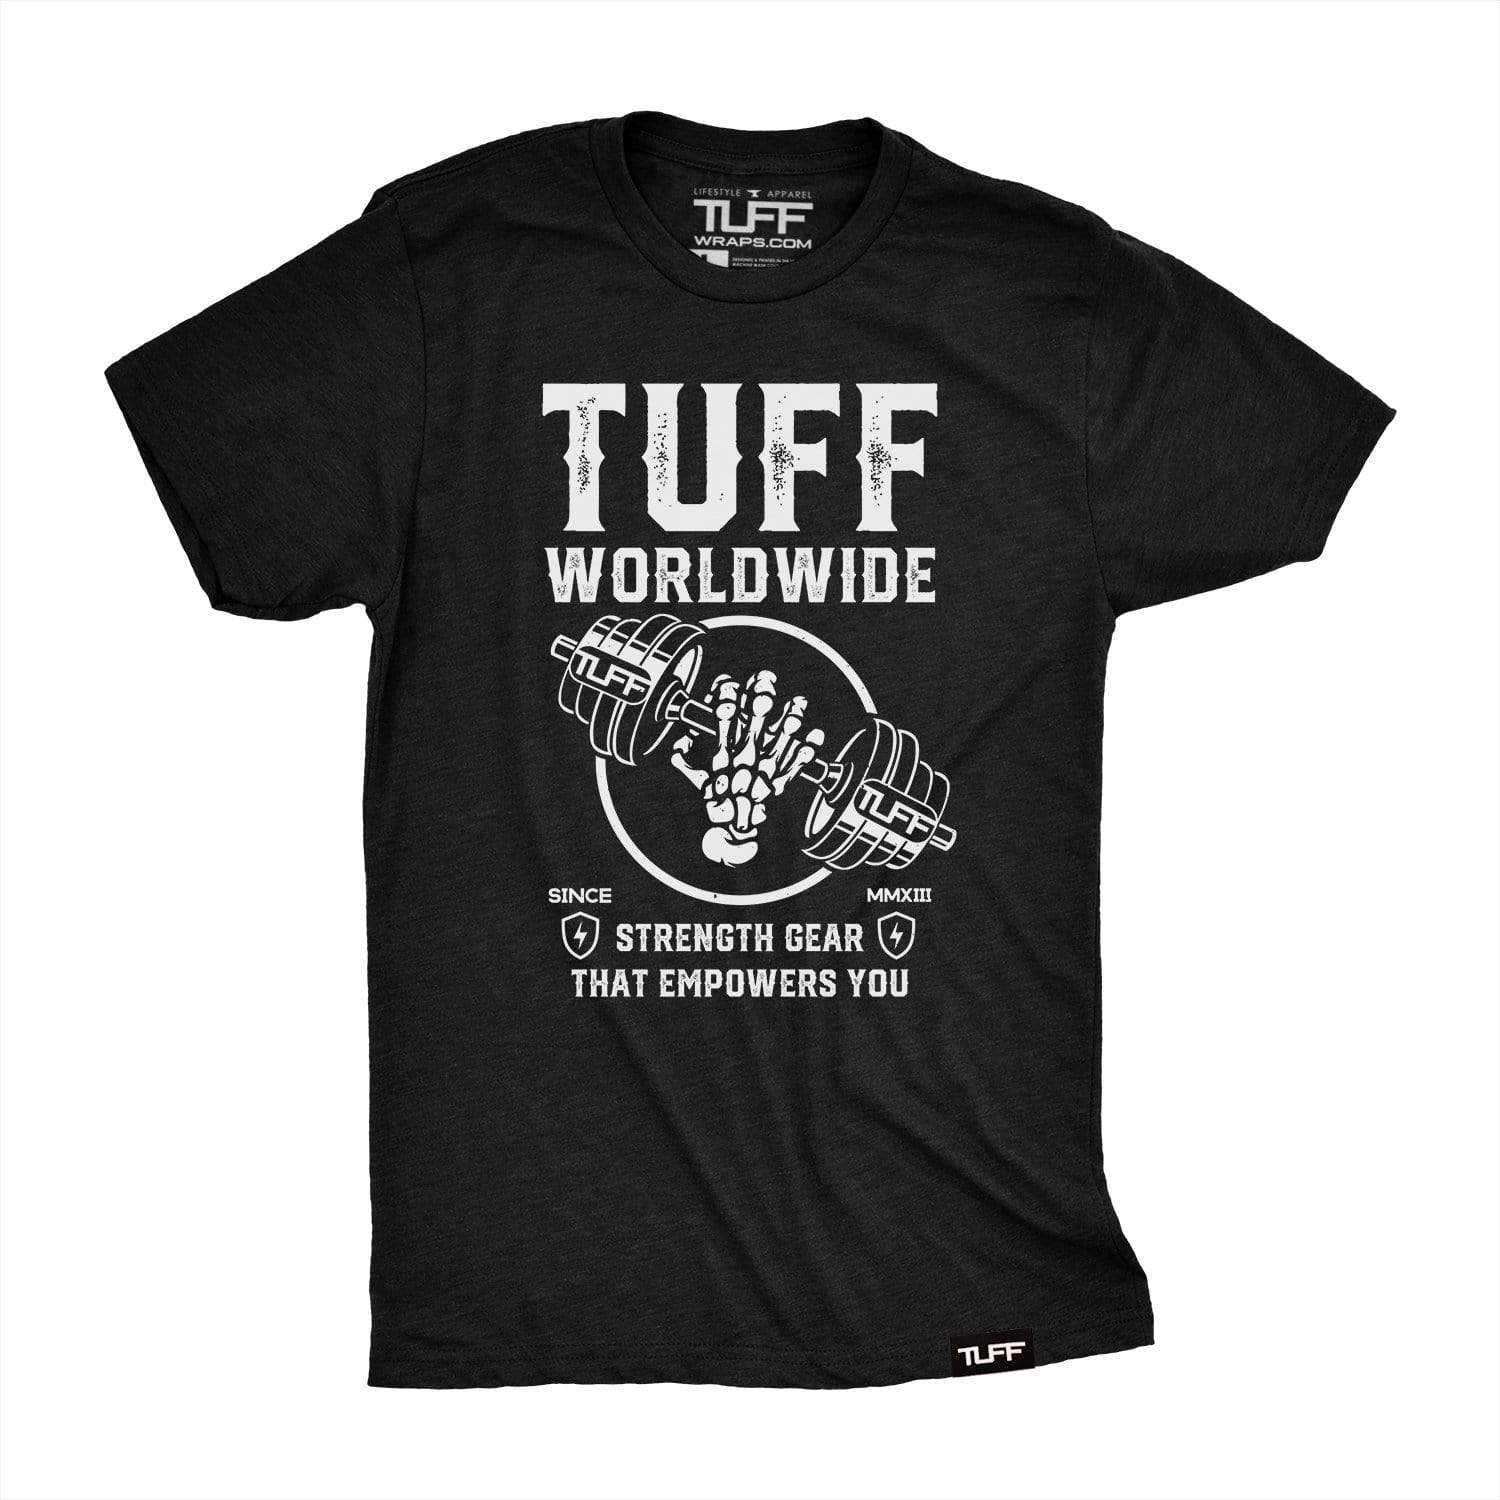 TUFF Empower Tee S / Black TuffWraps.com